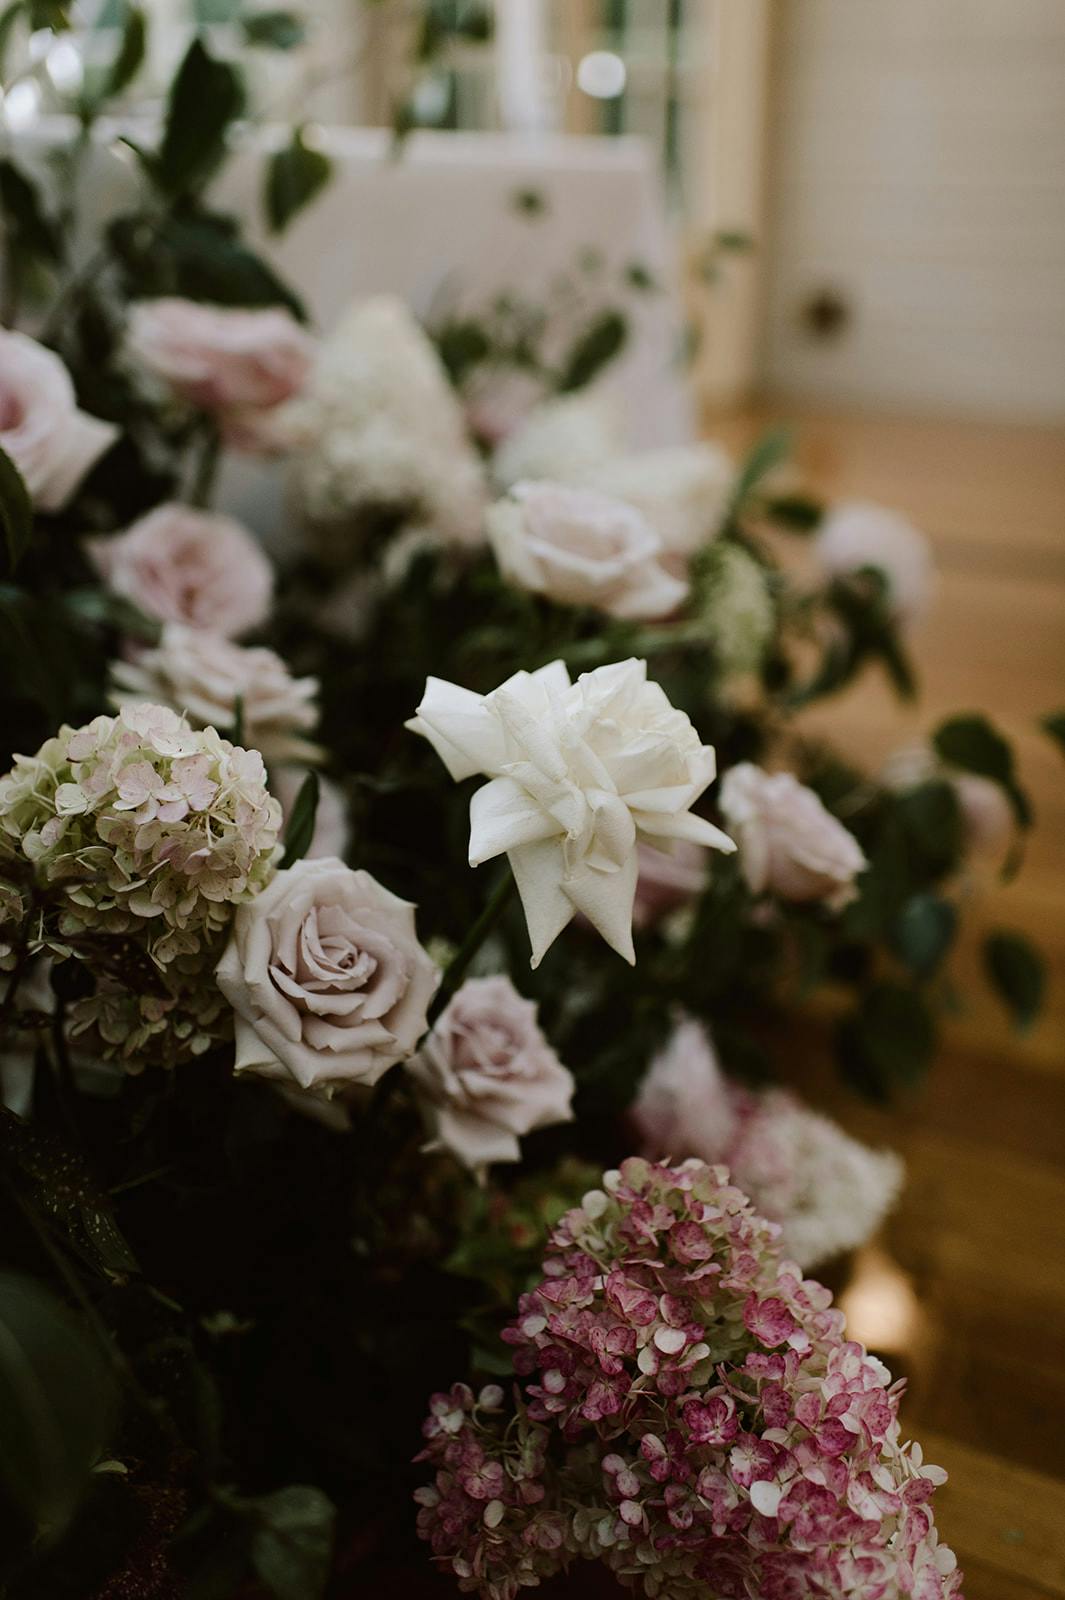 Wedding reception flowers